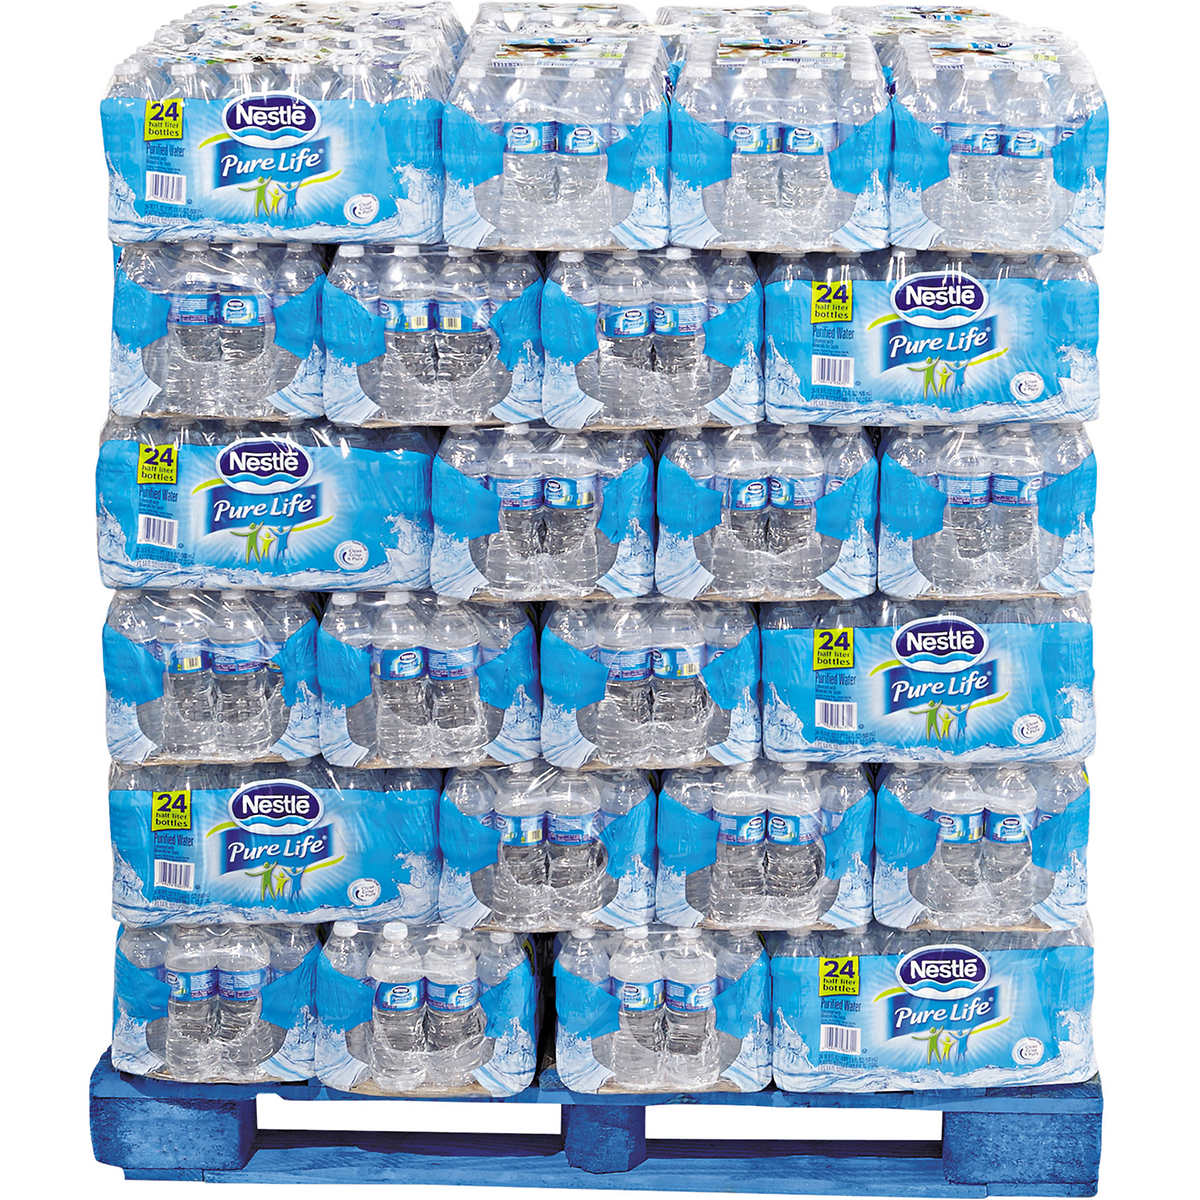 Skid Pallet of Water Bottles - 40 Cases